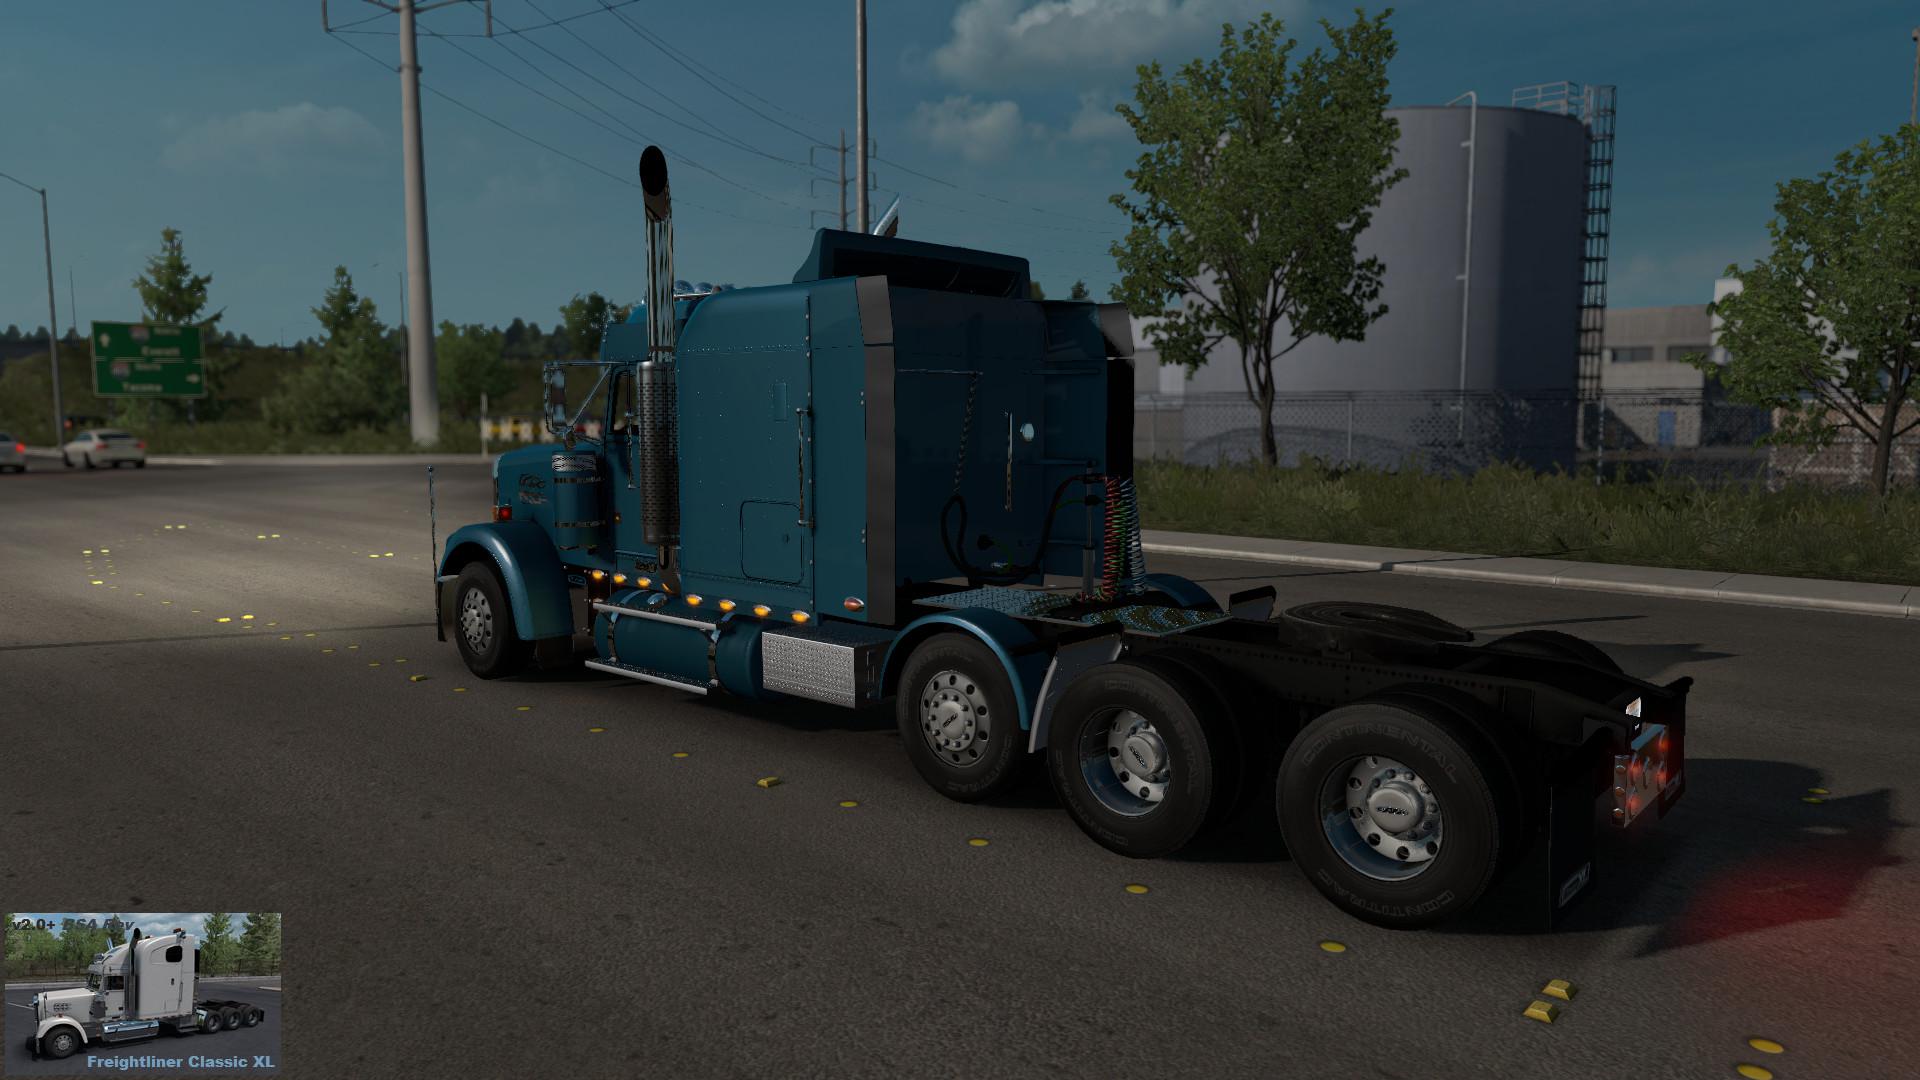 Ats Freightliner Classic Xl Truck V2 138x American Truck Simulator Modsclub